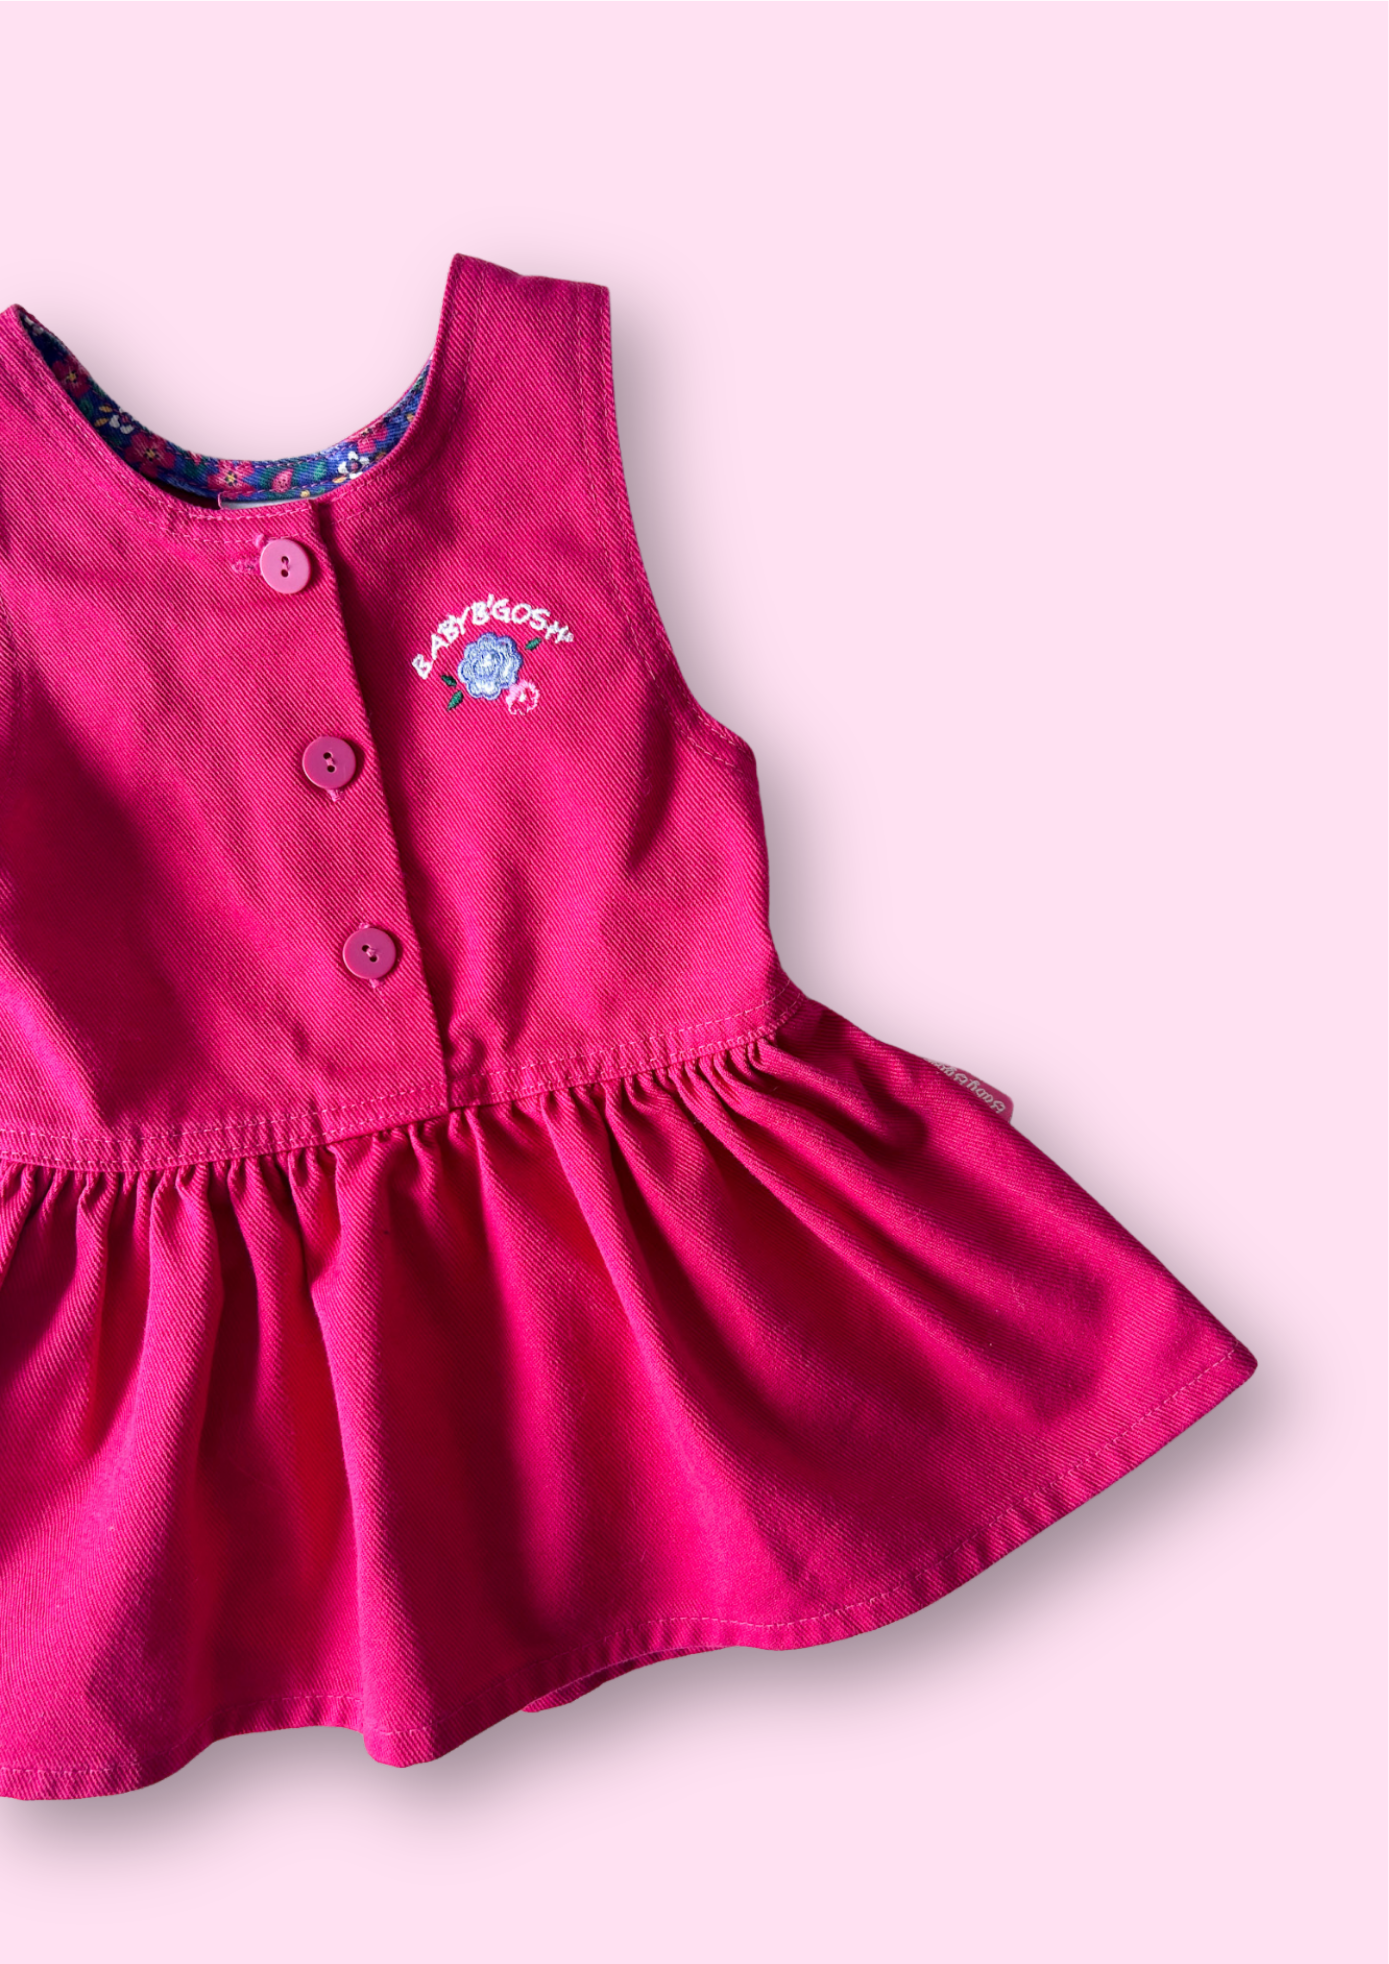 Vintage OshKosh Raspberry Pink Dress, approx 12 months